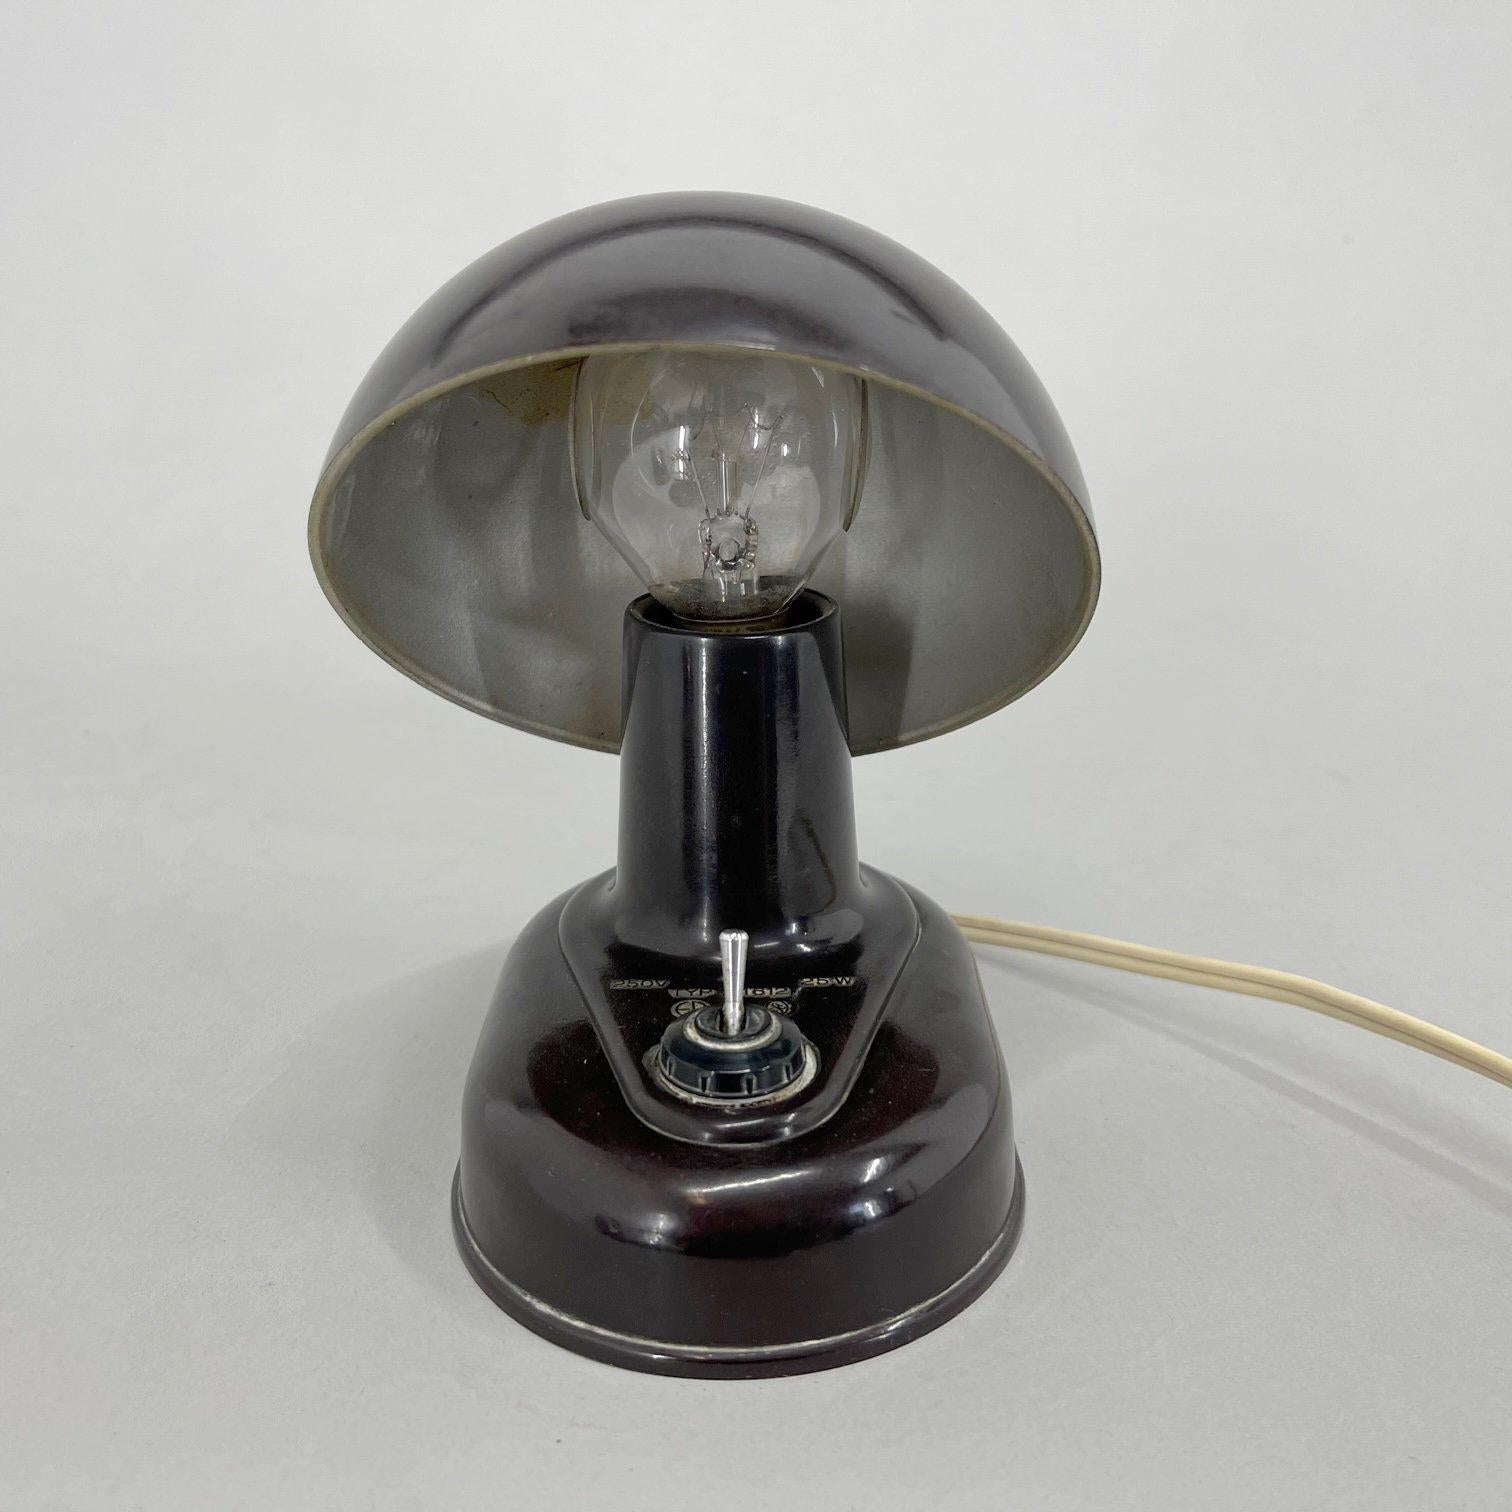 20th Century Table or Wall Bakelite Mushroom Lamp, 1960's